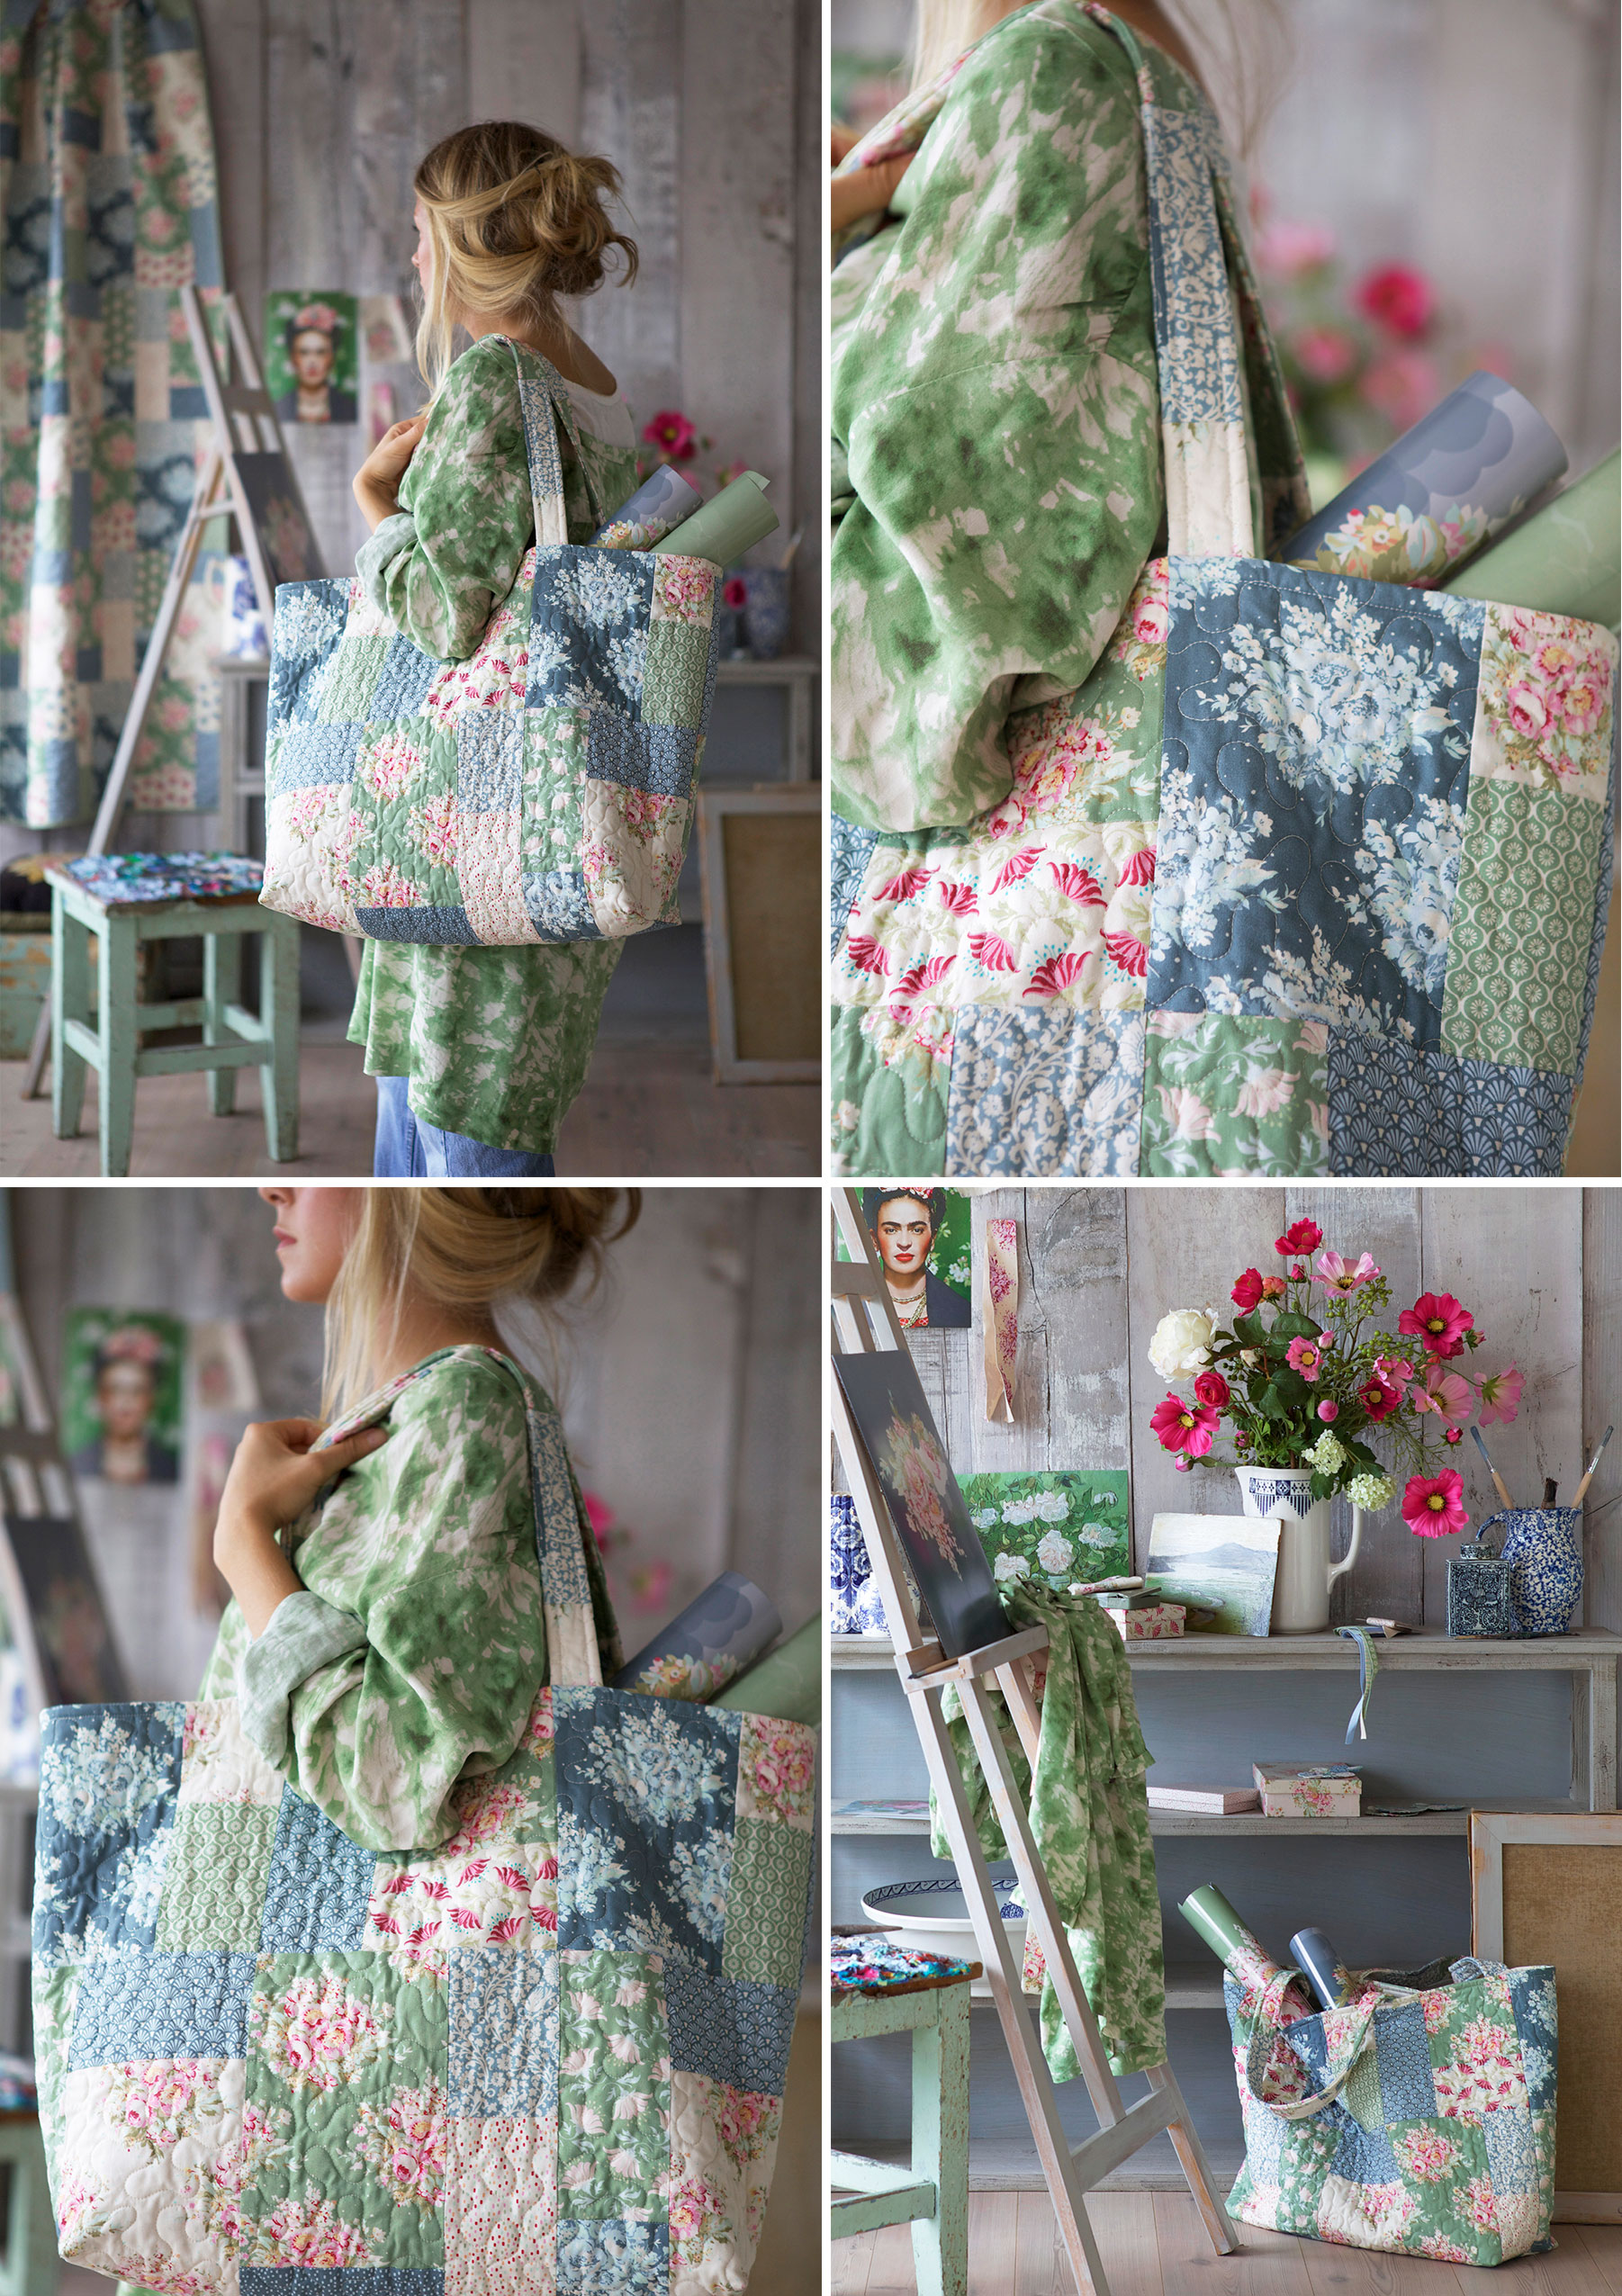 PATTERN Quilt Fabric Tote Purse Travel Tote Handbag UNCUT NEW Graham  Cracker | eBay